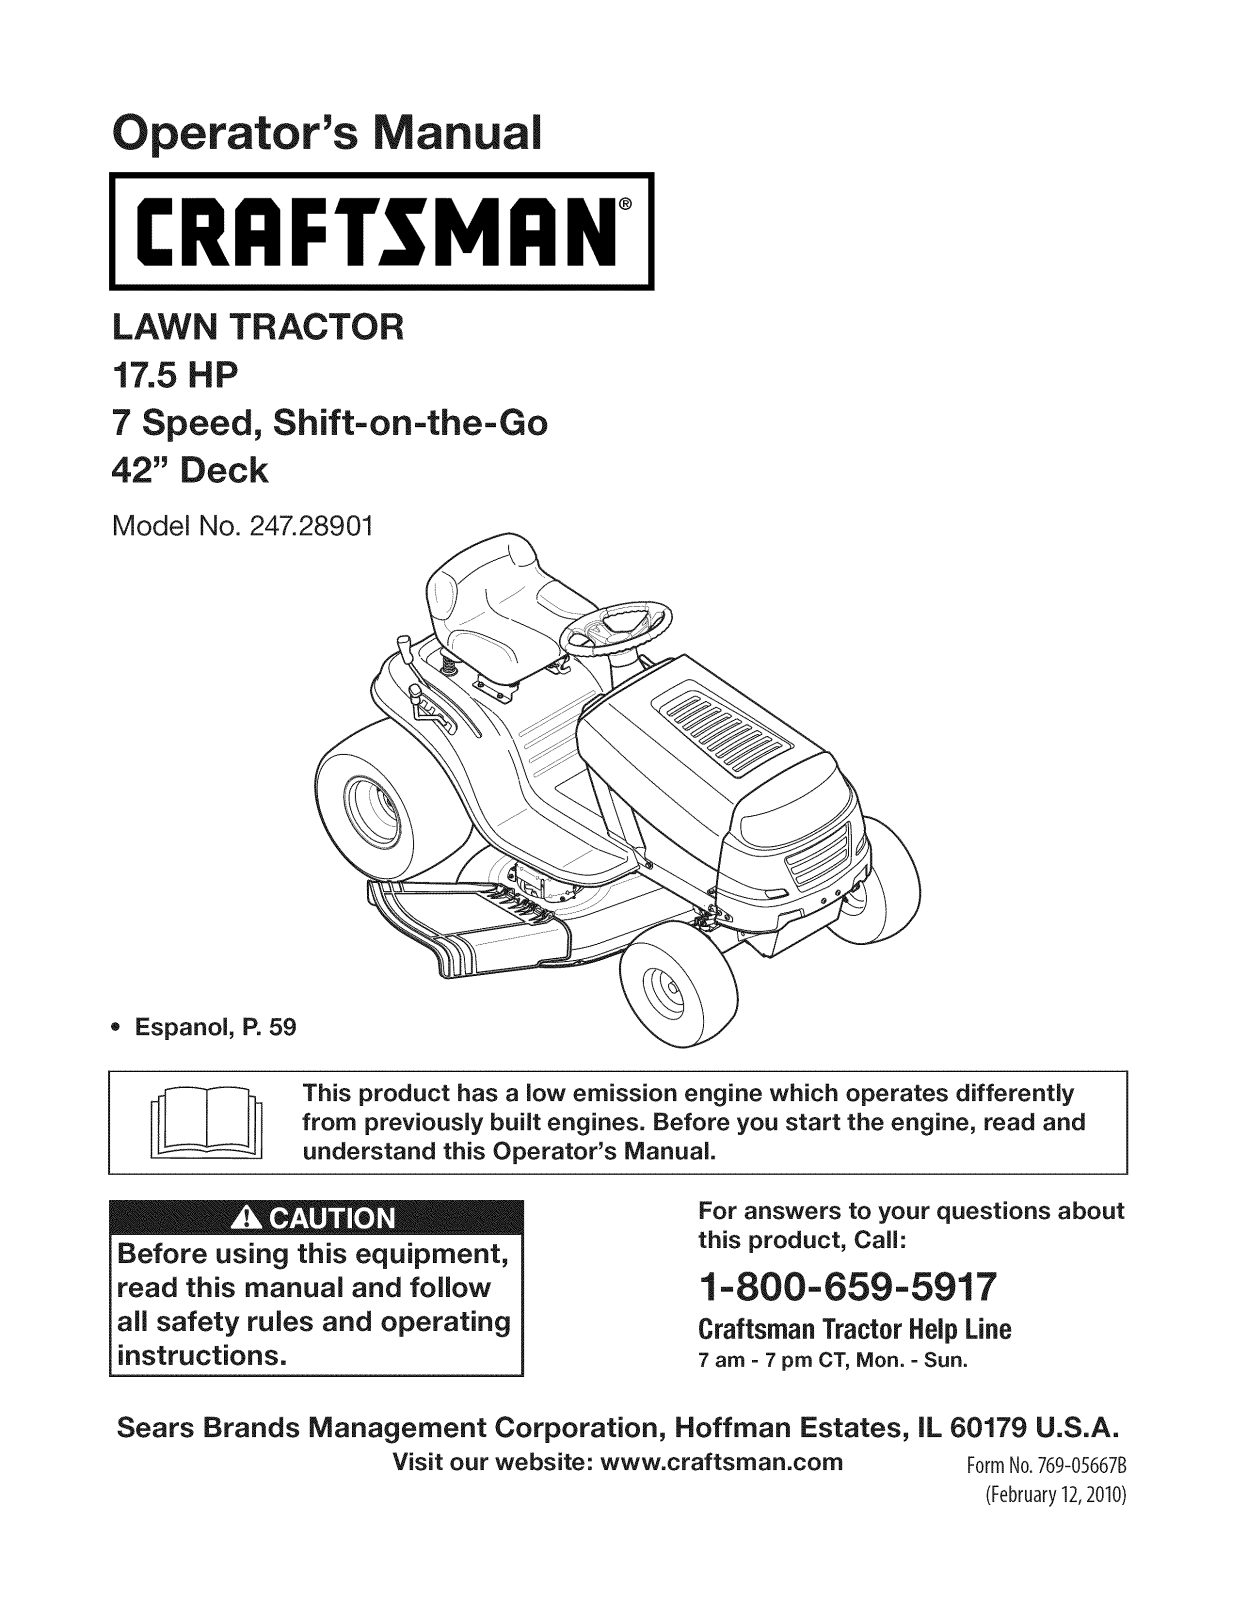 Craftsman 247289010 Owner’s Manual